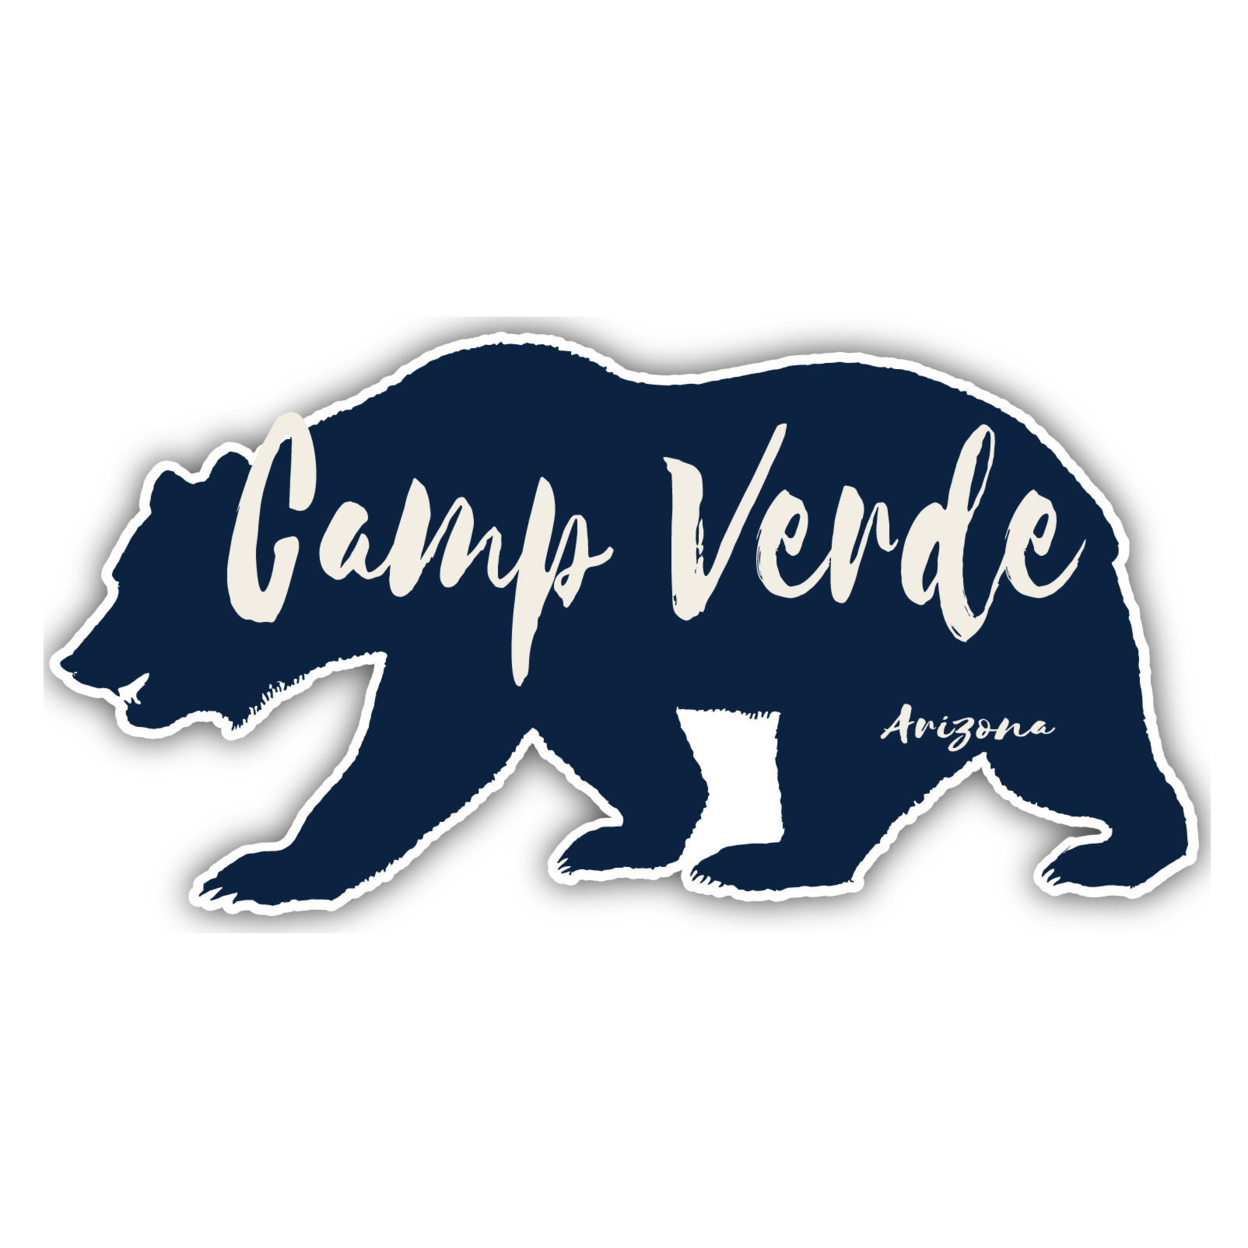 Camp Verde Arizona Souvenir Decorative Stickers (Choose Theme And Size) - 4-Pack, 8-Inch, Tent